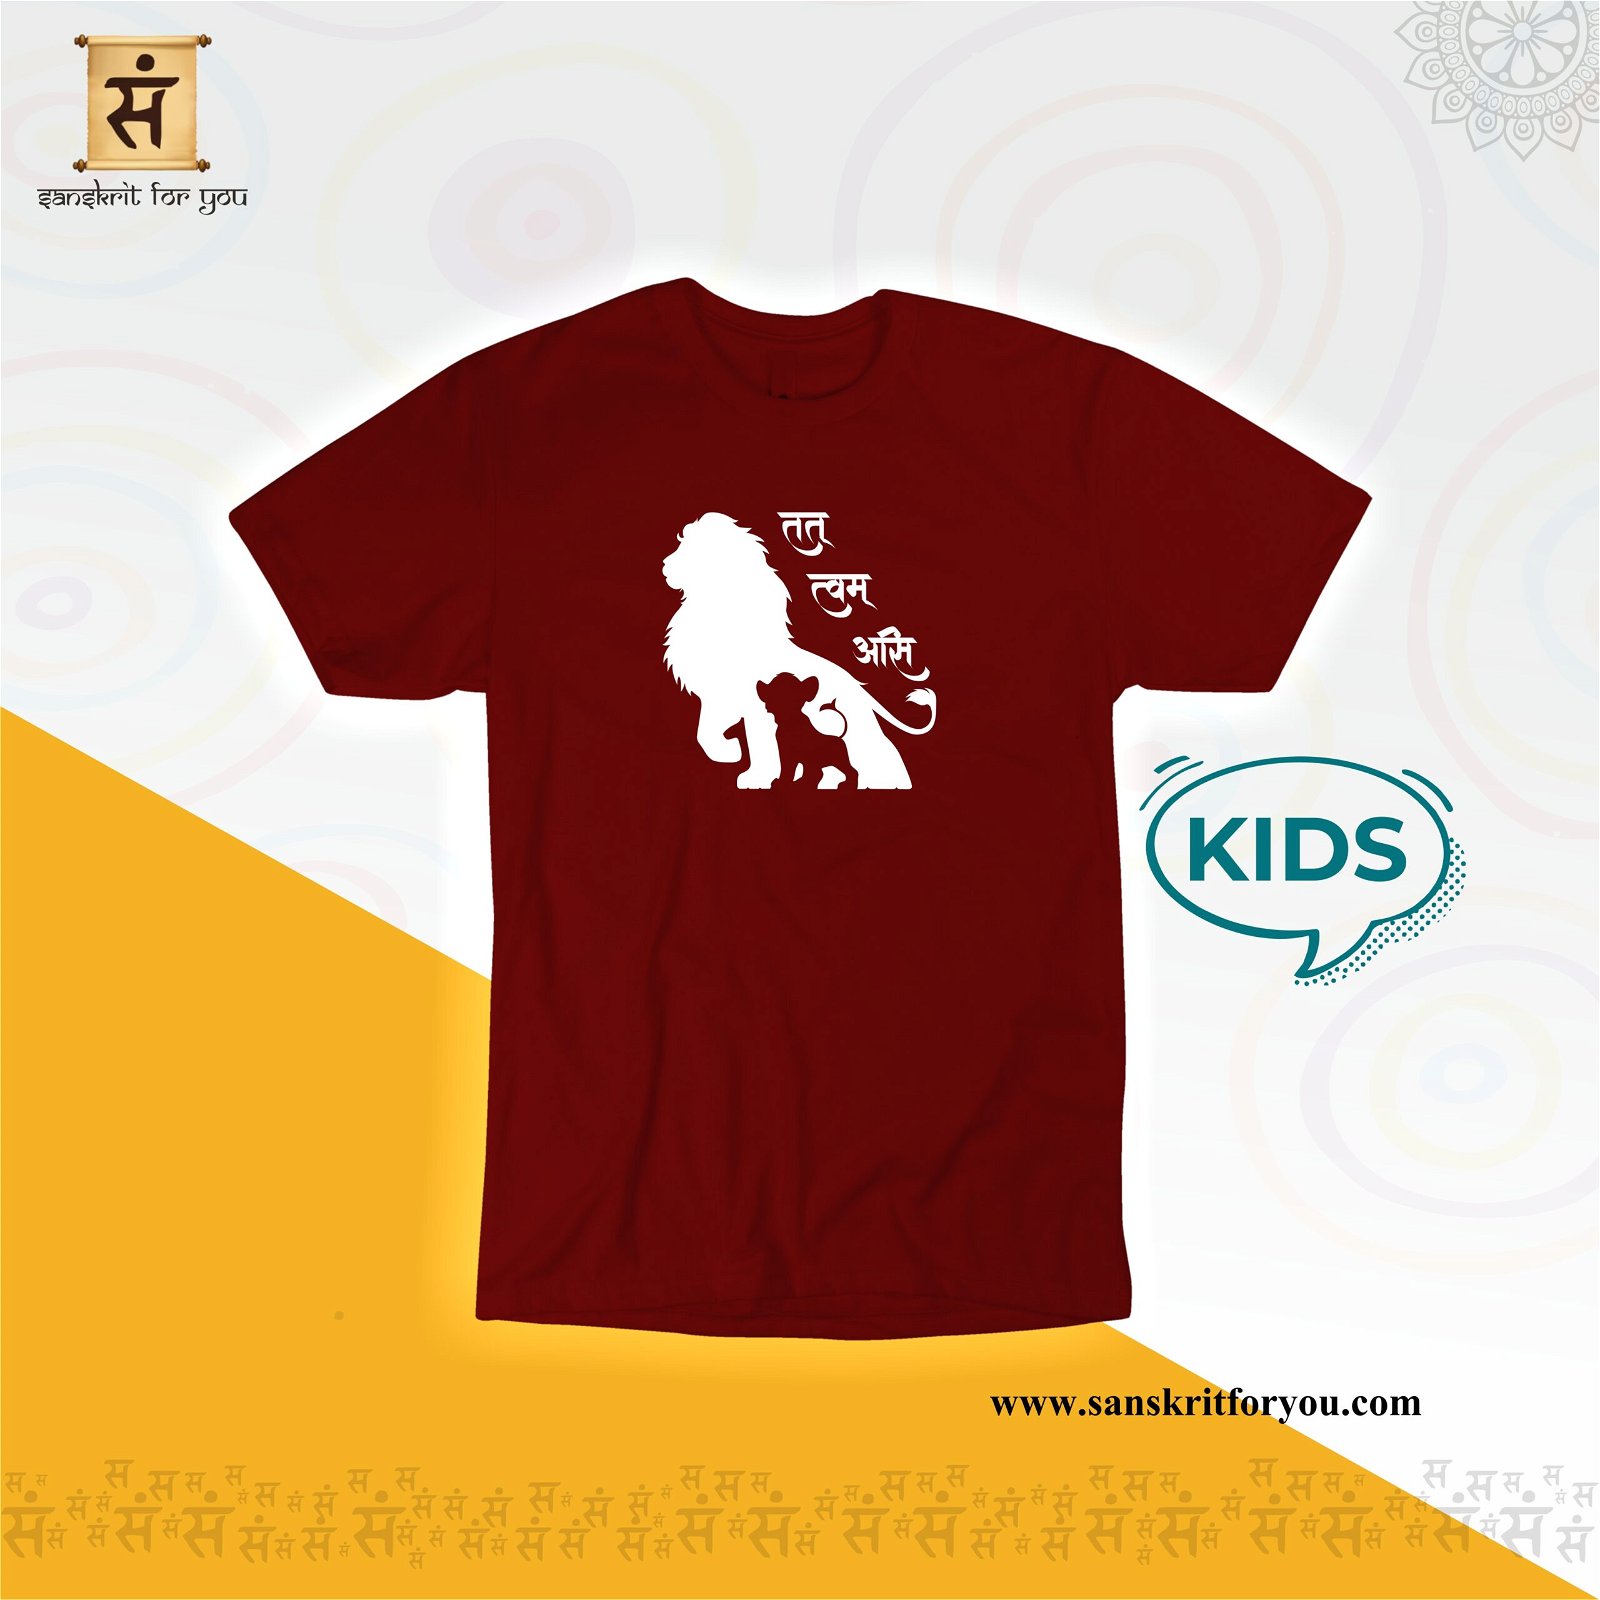 Tat-tvam-asi Kids Maroon T-shirt